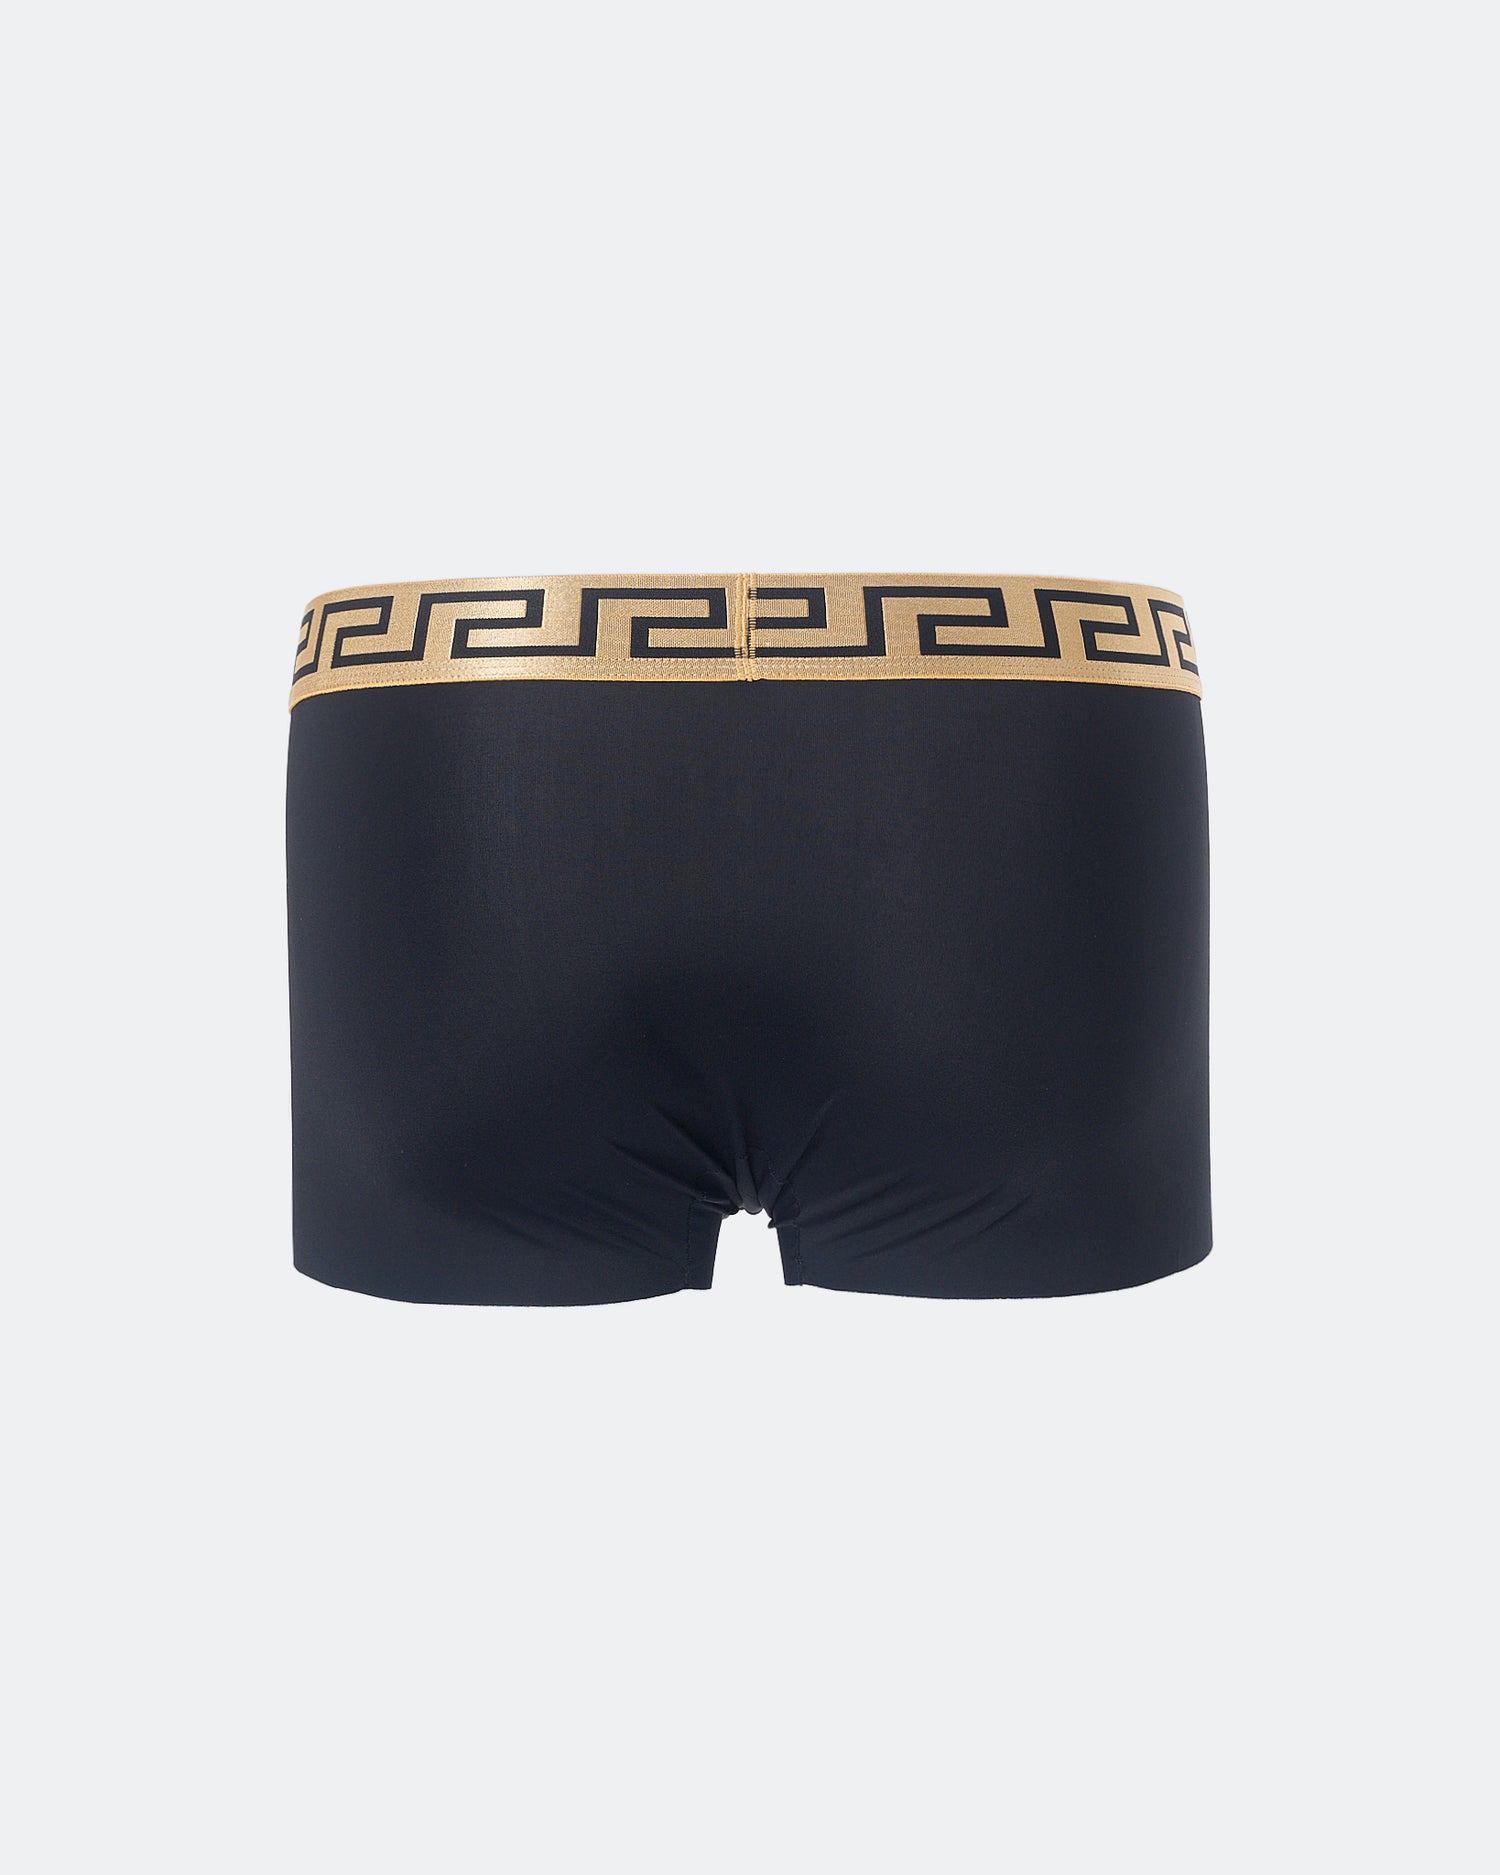 VER Medusda Logo Printed Men Black Underwear 6.90